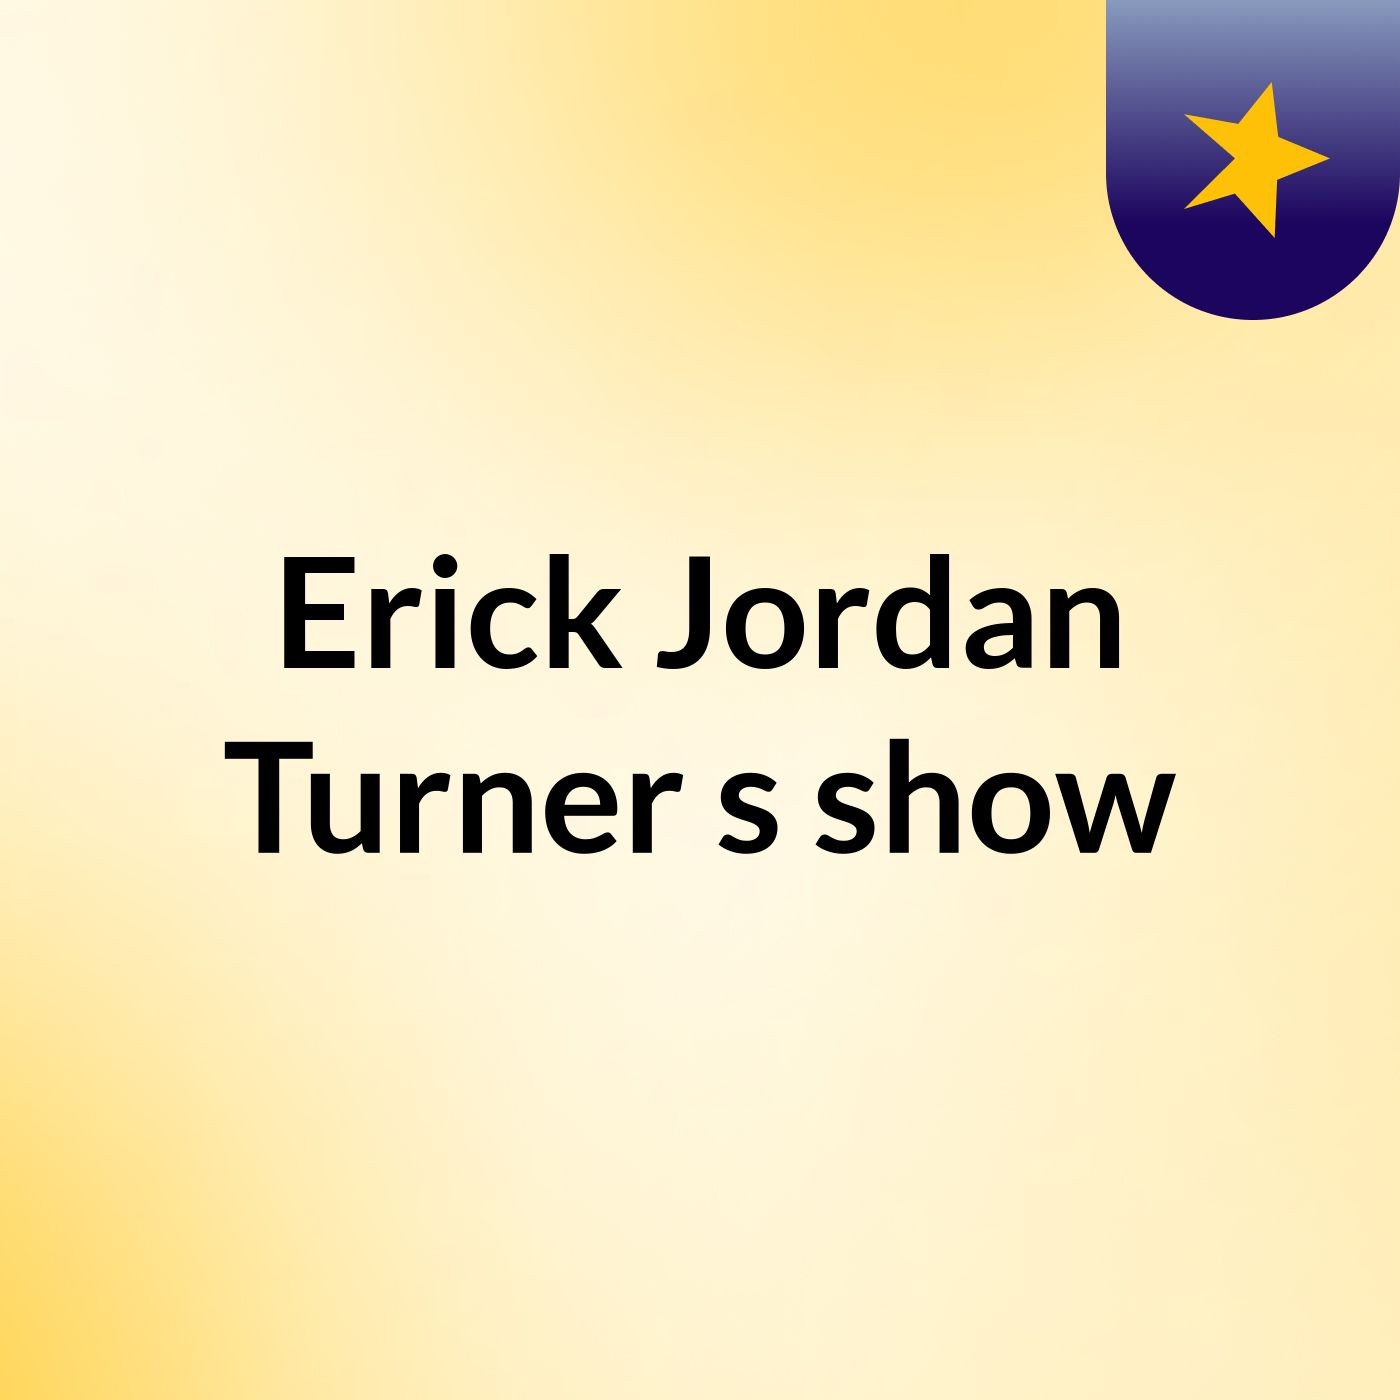 Erick Jordan Turner's show